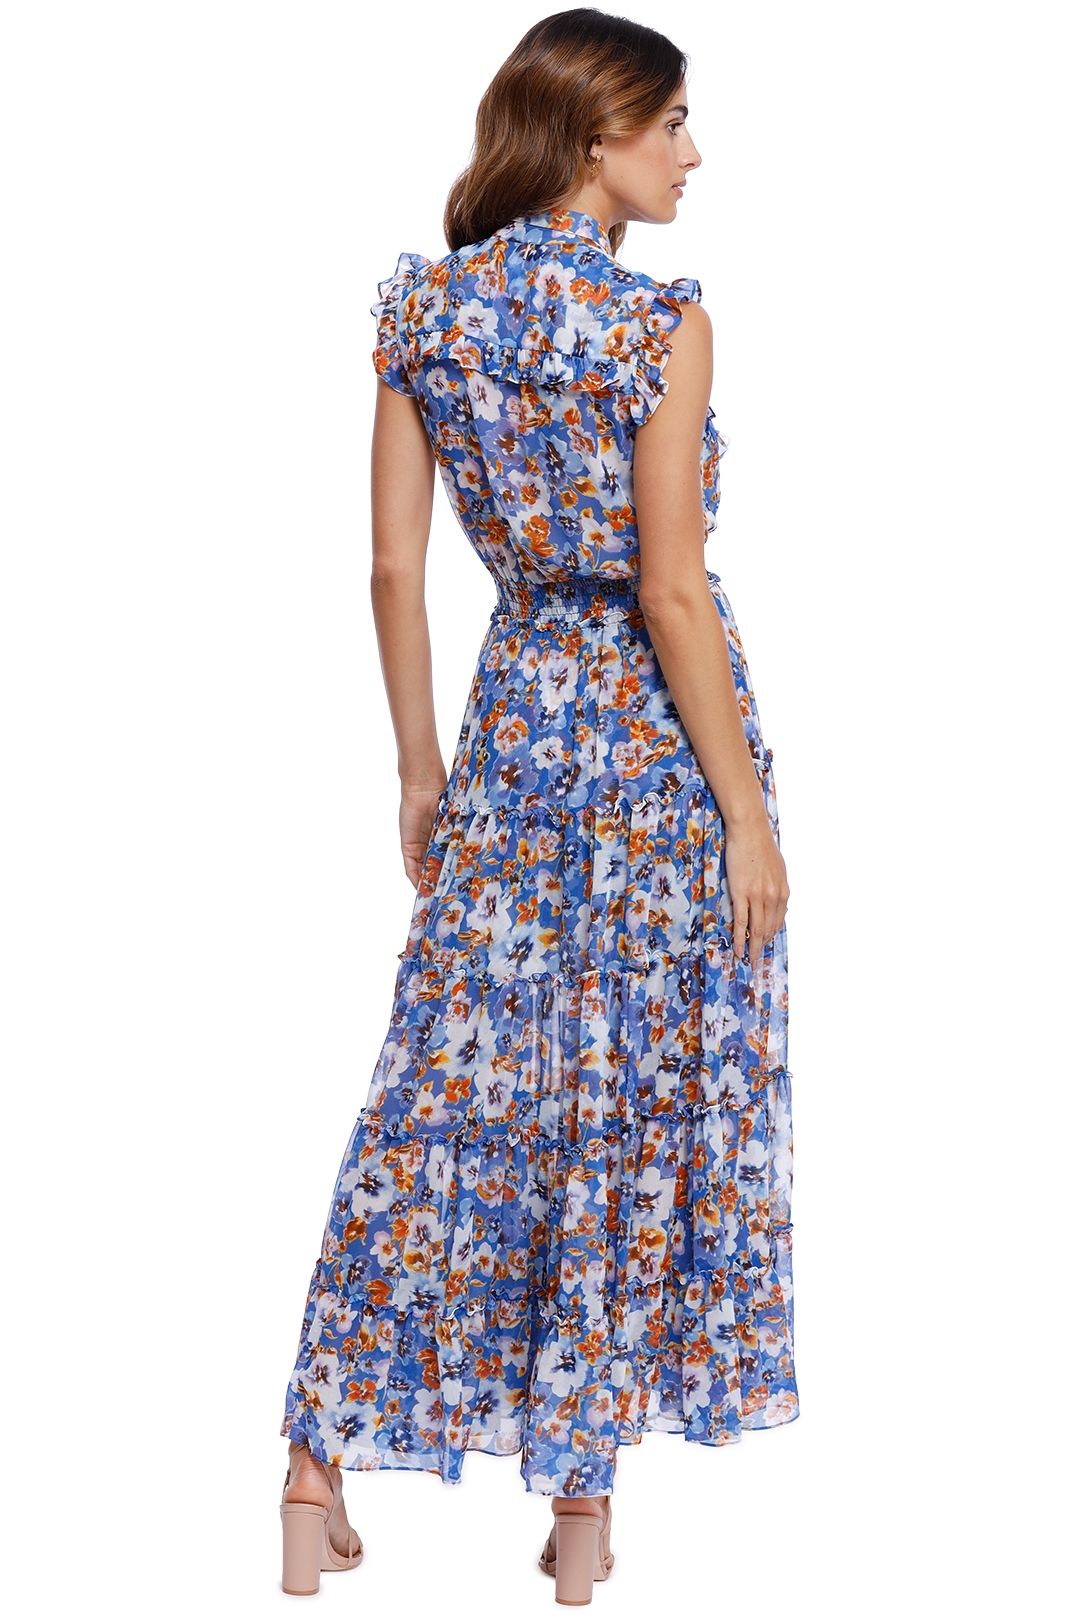 Misa LA Trina Dress Blue Pansy floral